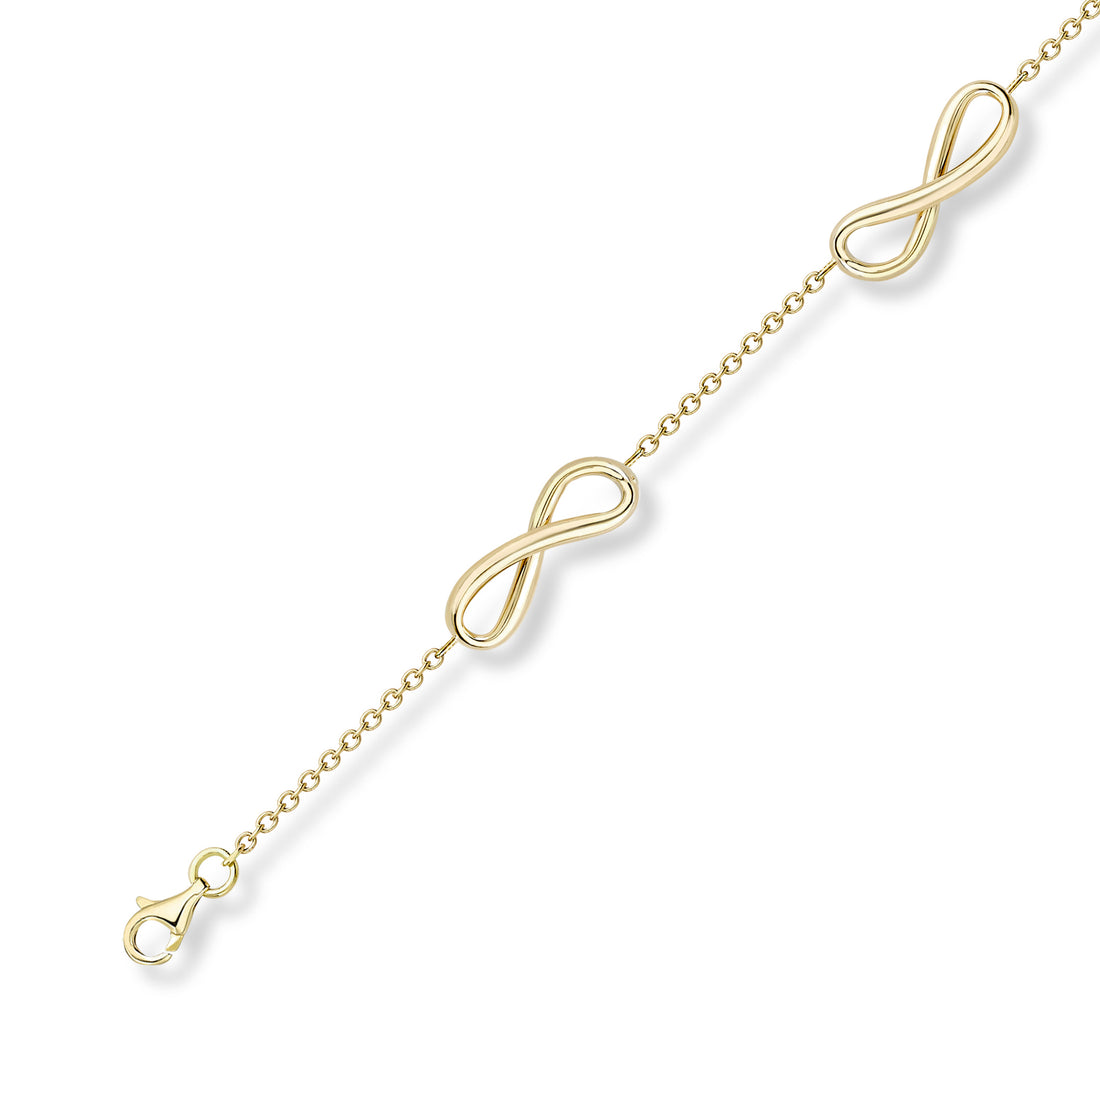 9ct. Yellow Gold Fancy Bracelet - Robert Anthony Jewellers, Edinburgh